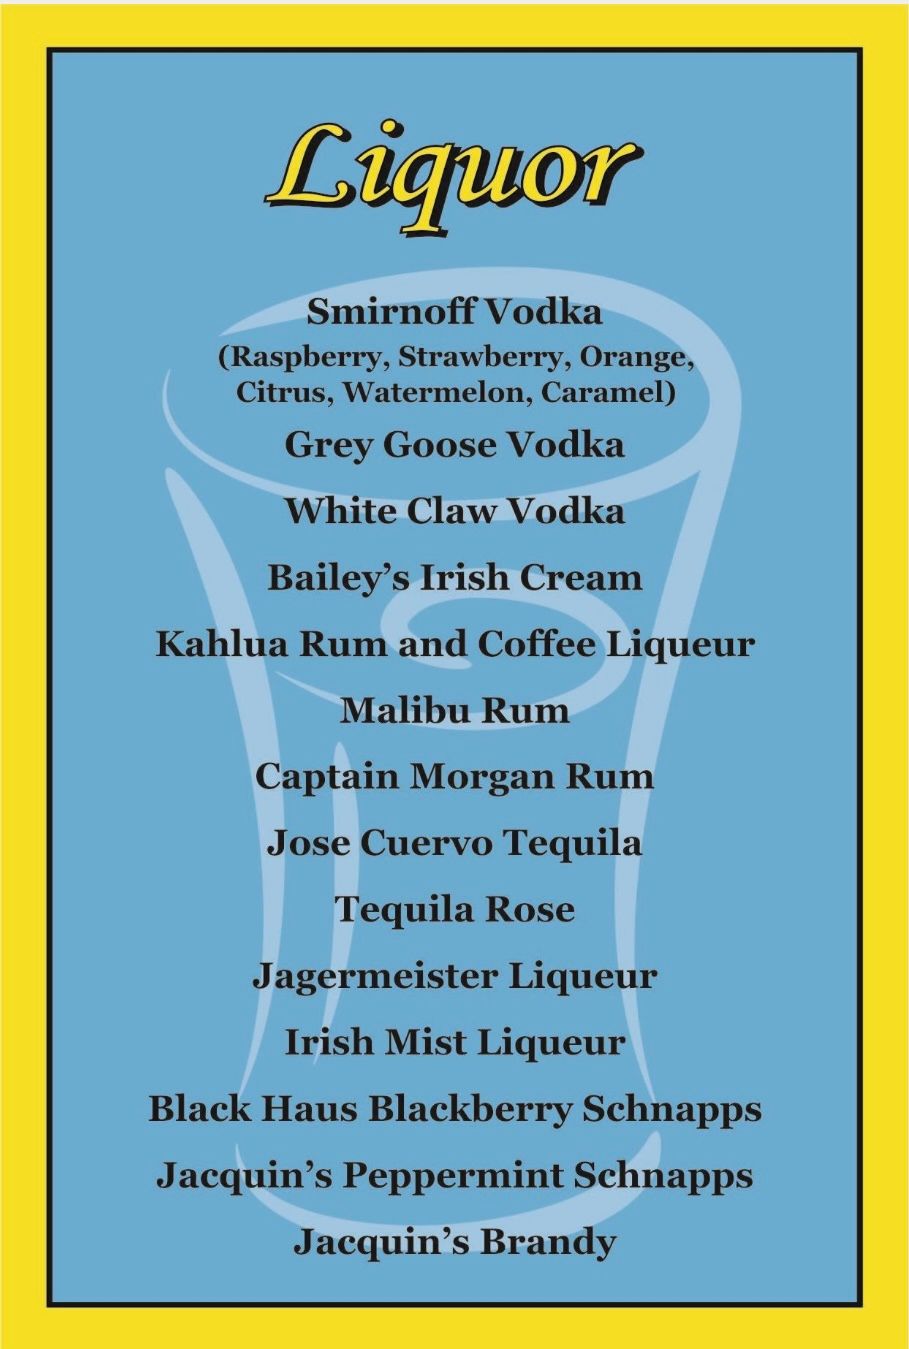 A list of liquor including Smirnoff vodka and Grey Goose vodka.